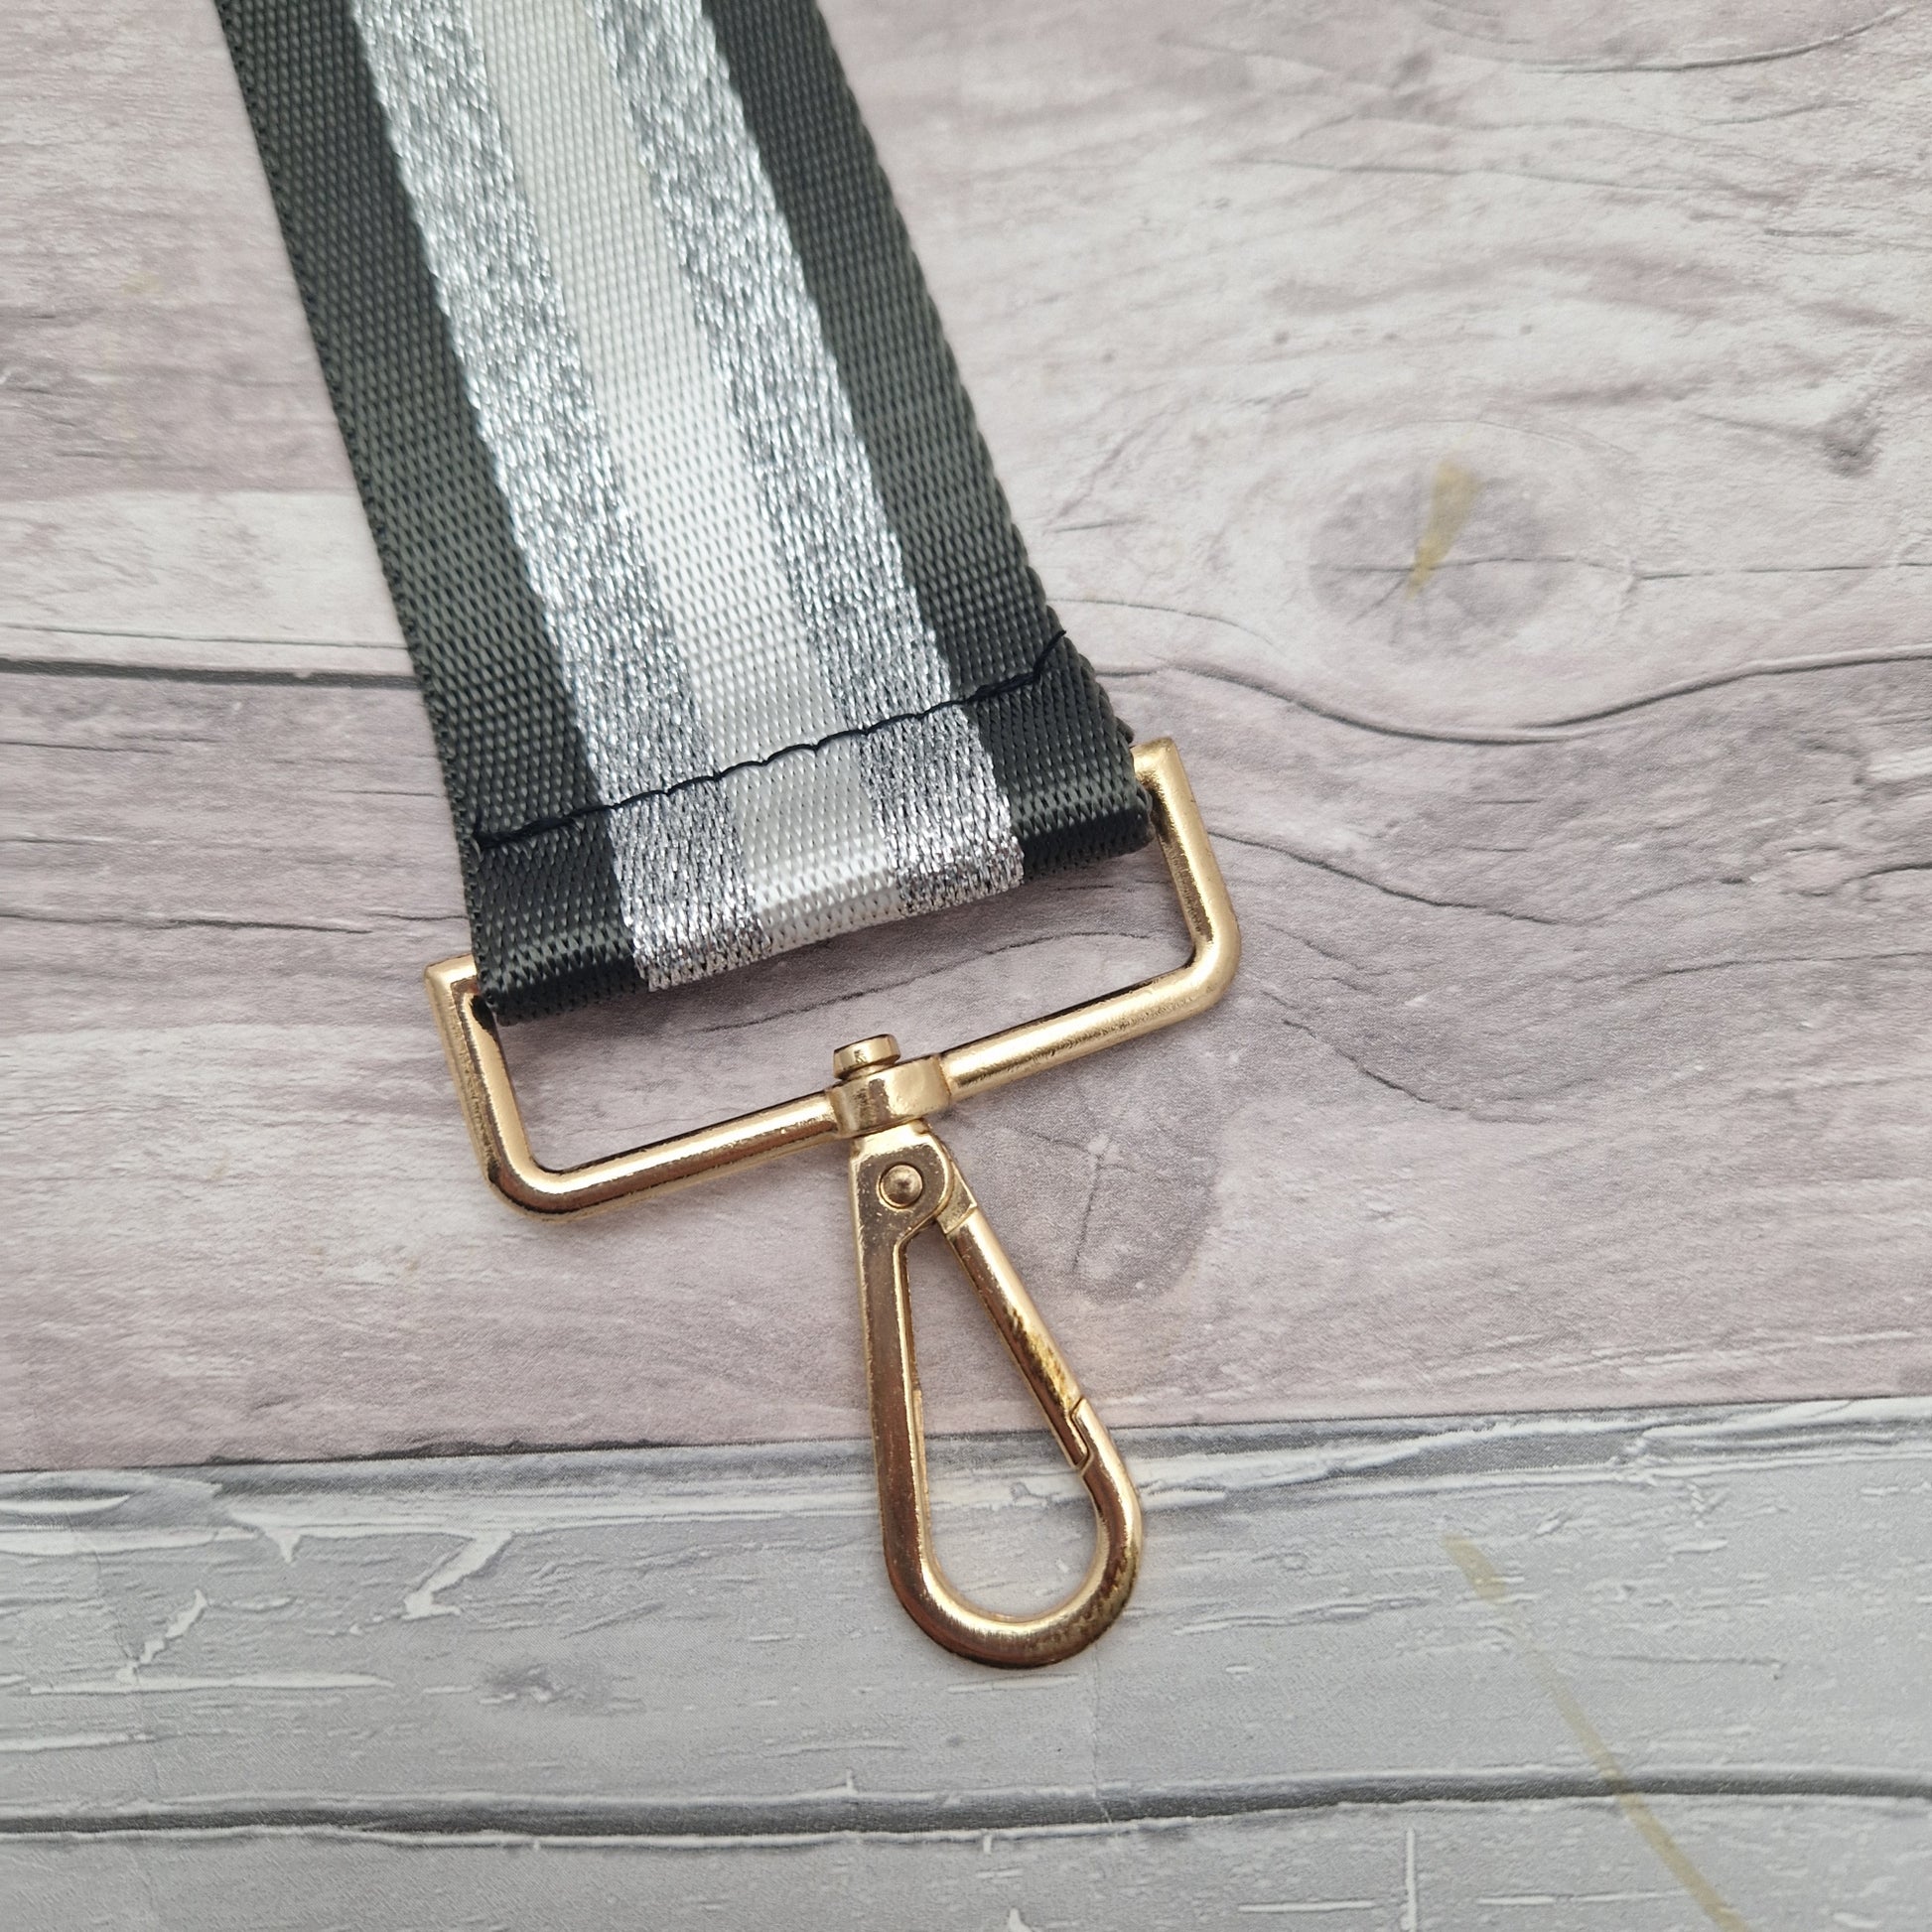 Shades of Dark Grey, white and metallic silver make up this striped Bag strap. Gold metal work.